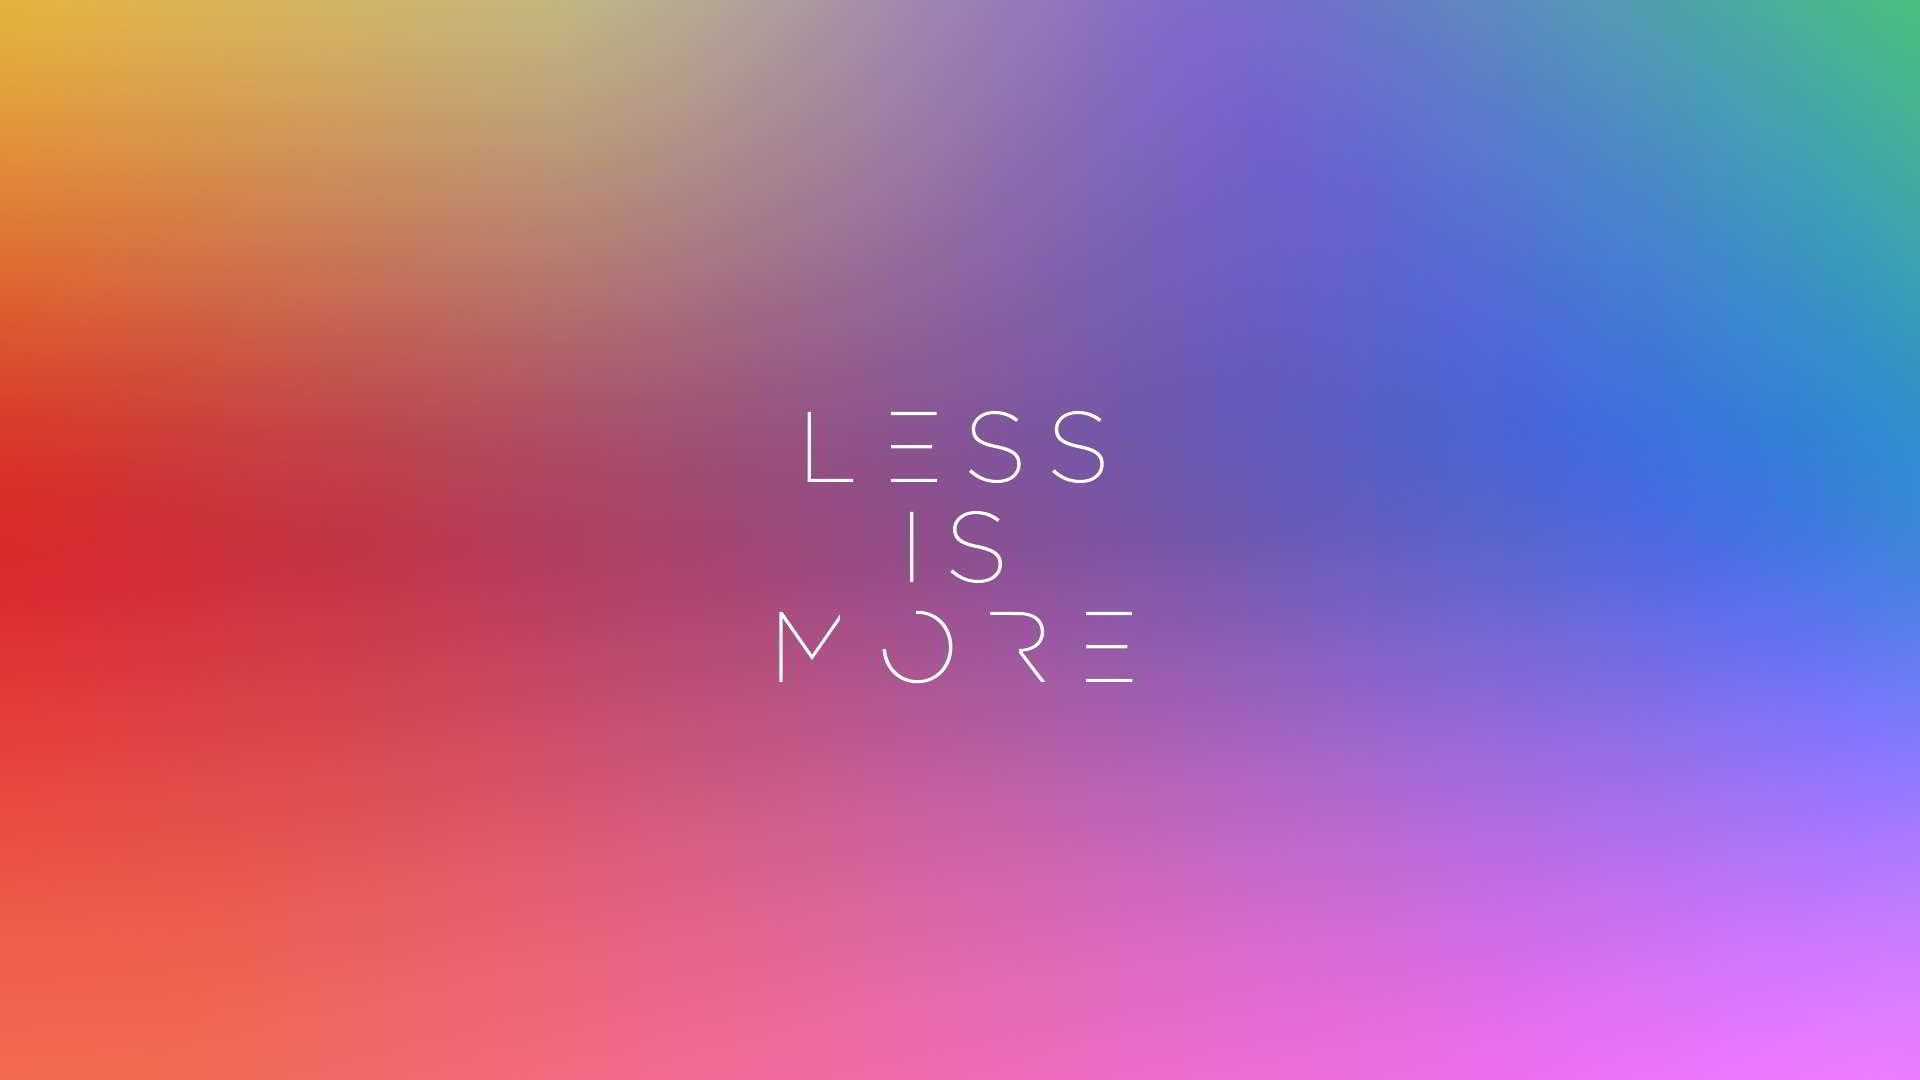 less_is_more_2_by_ausman101-d6yider